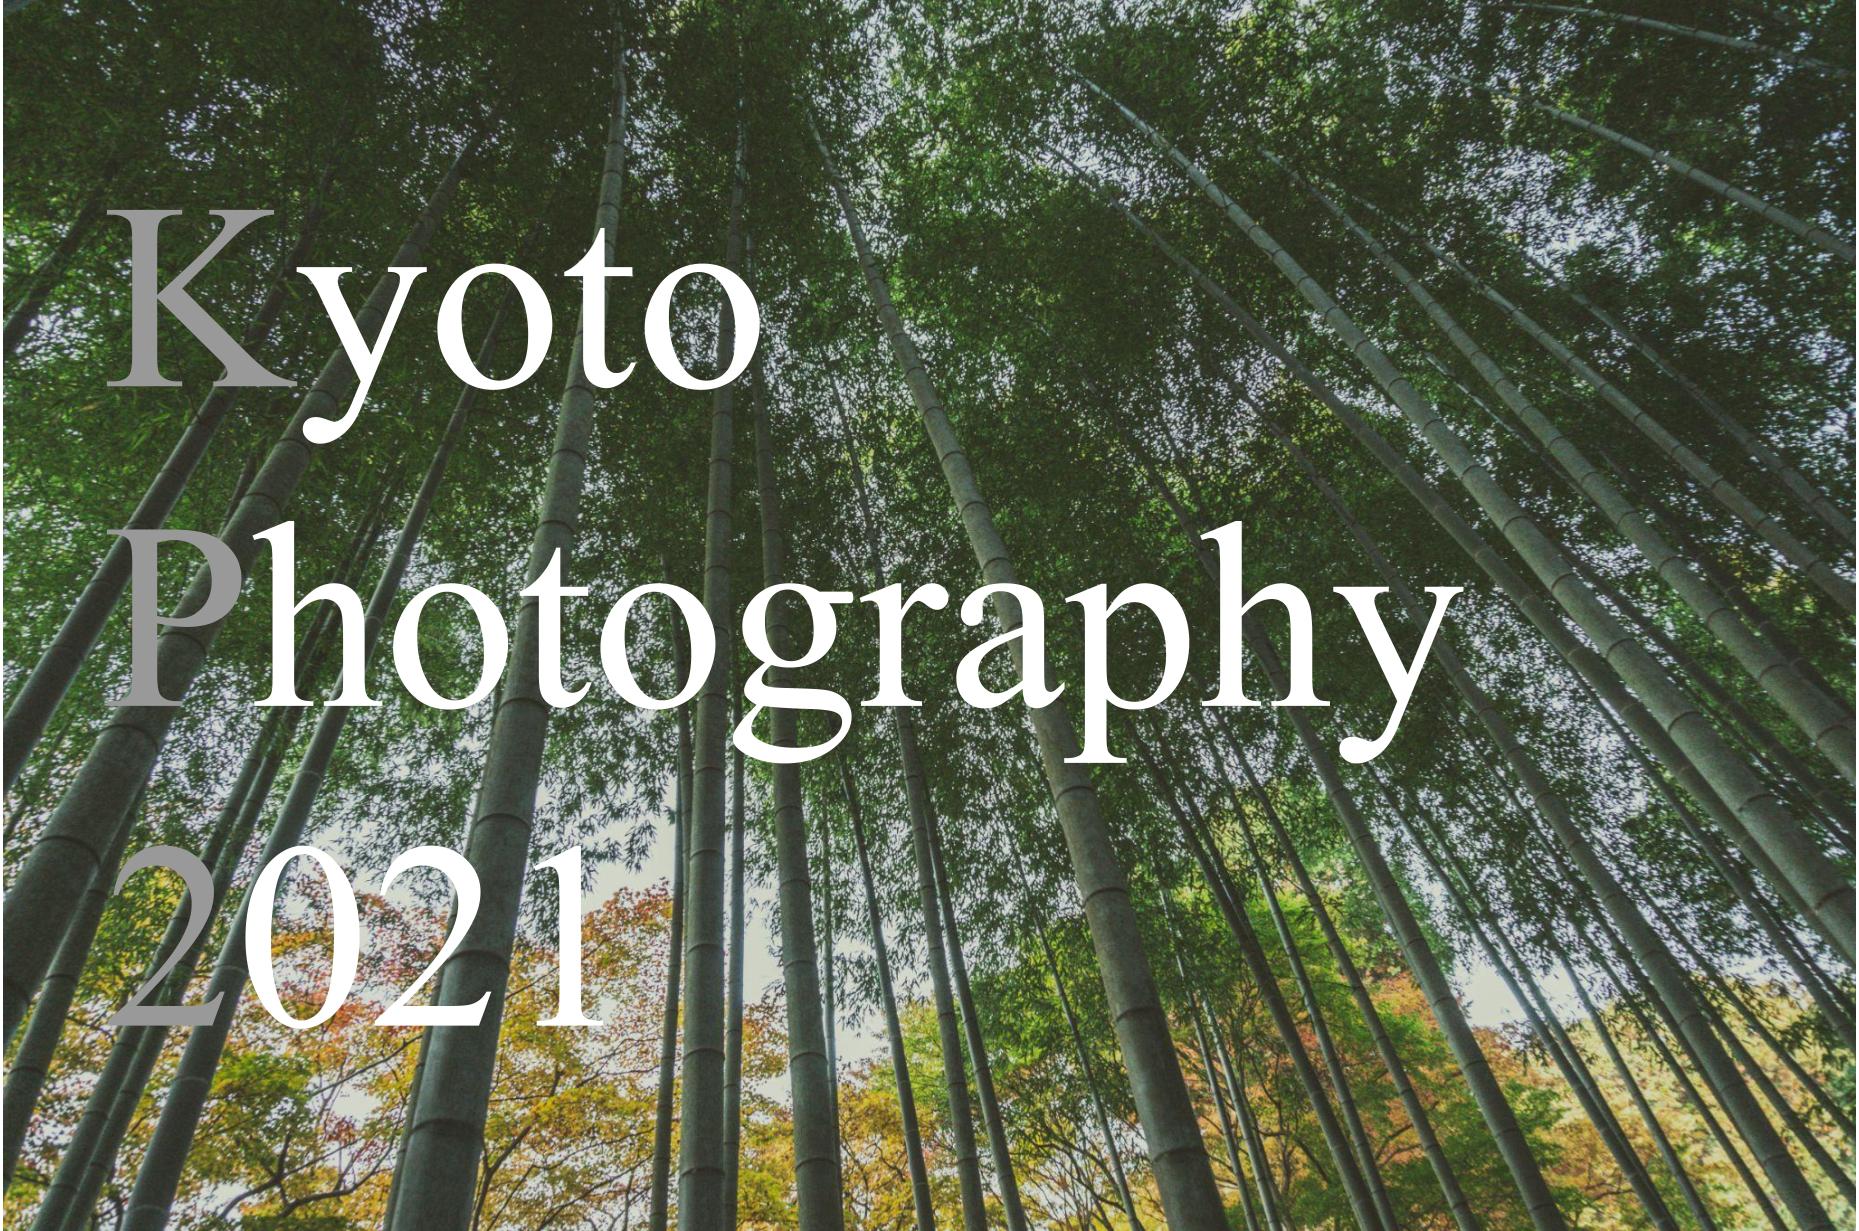 Kyoto Photography 2021